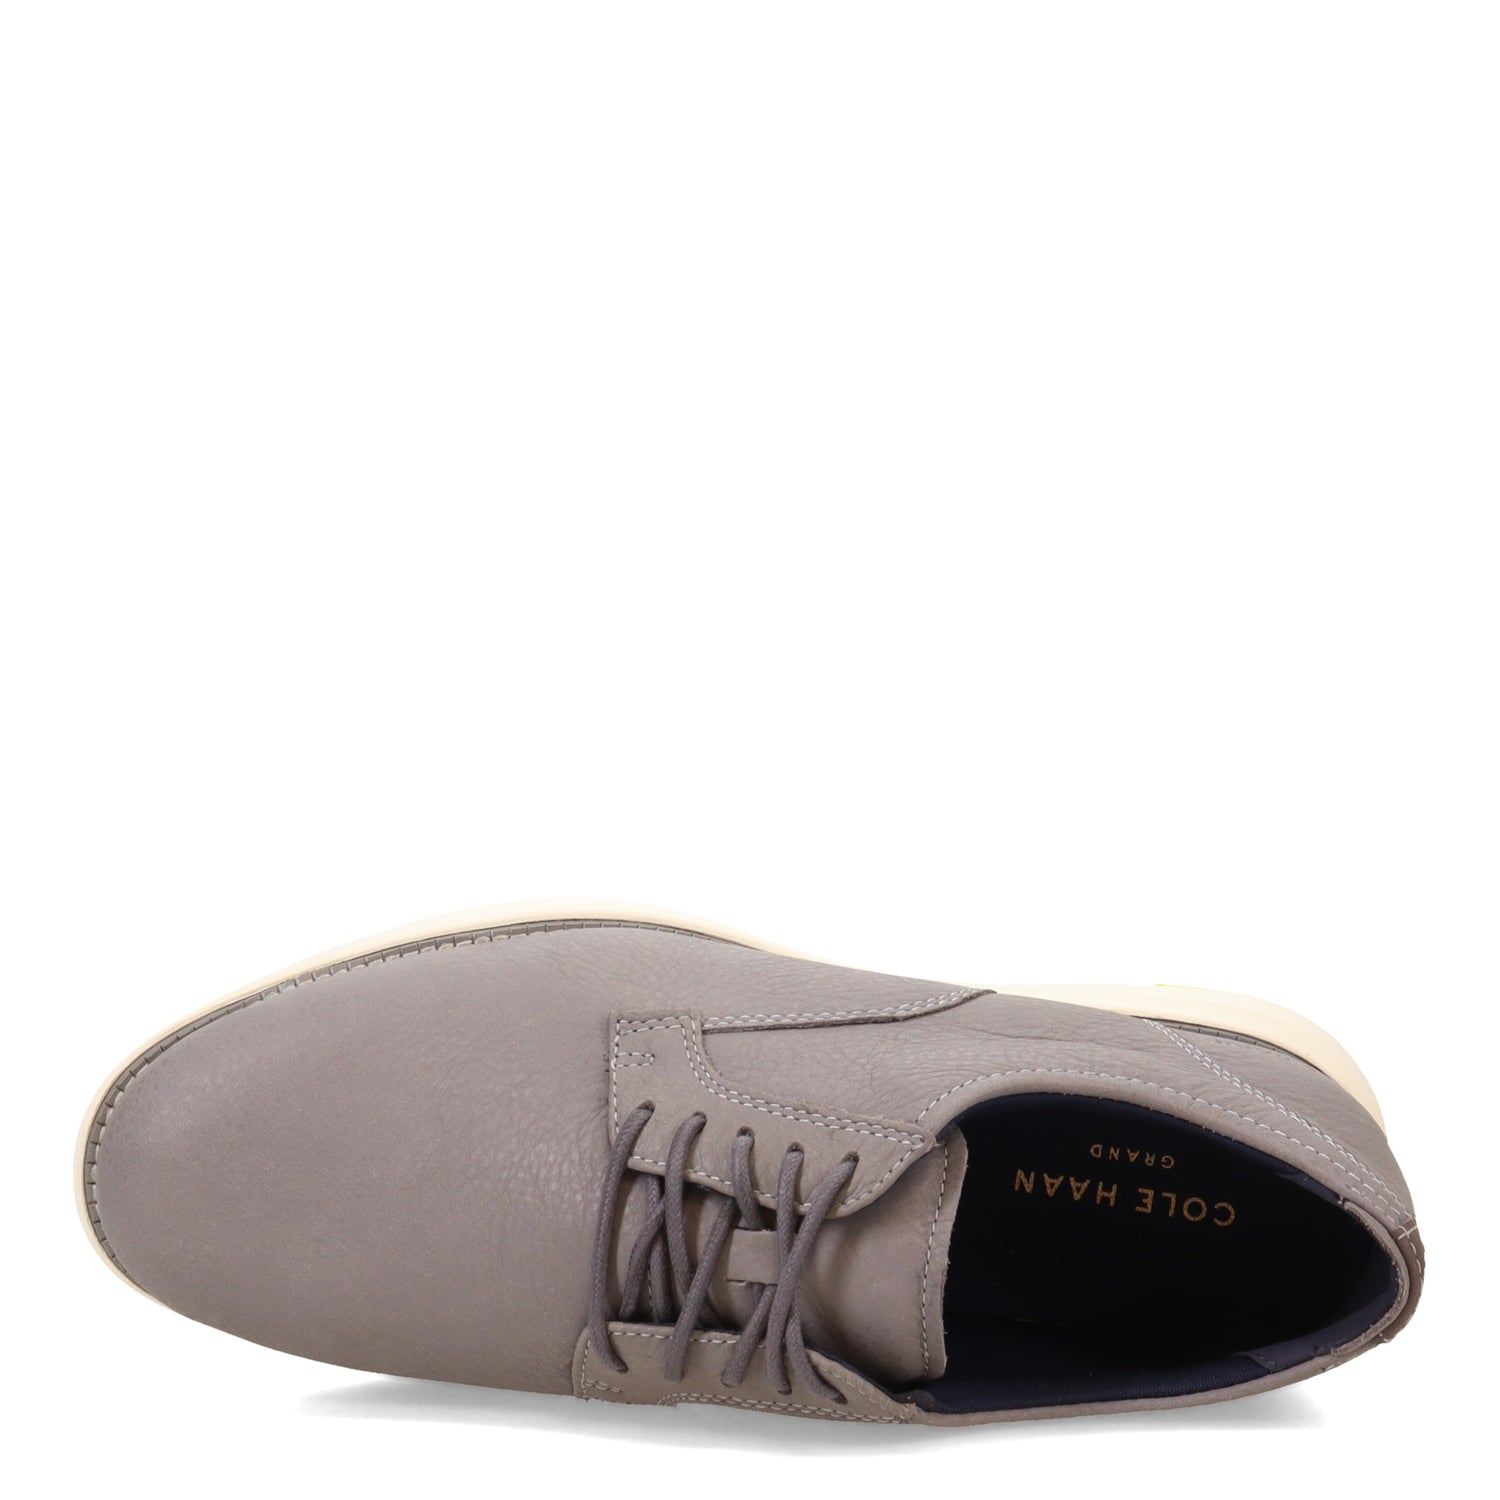 Peltz Shoes  Men's Cole Haan Grand Atlantic Oxford IRONSTONE C33830